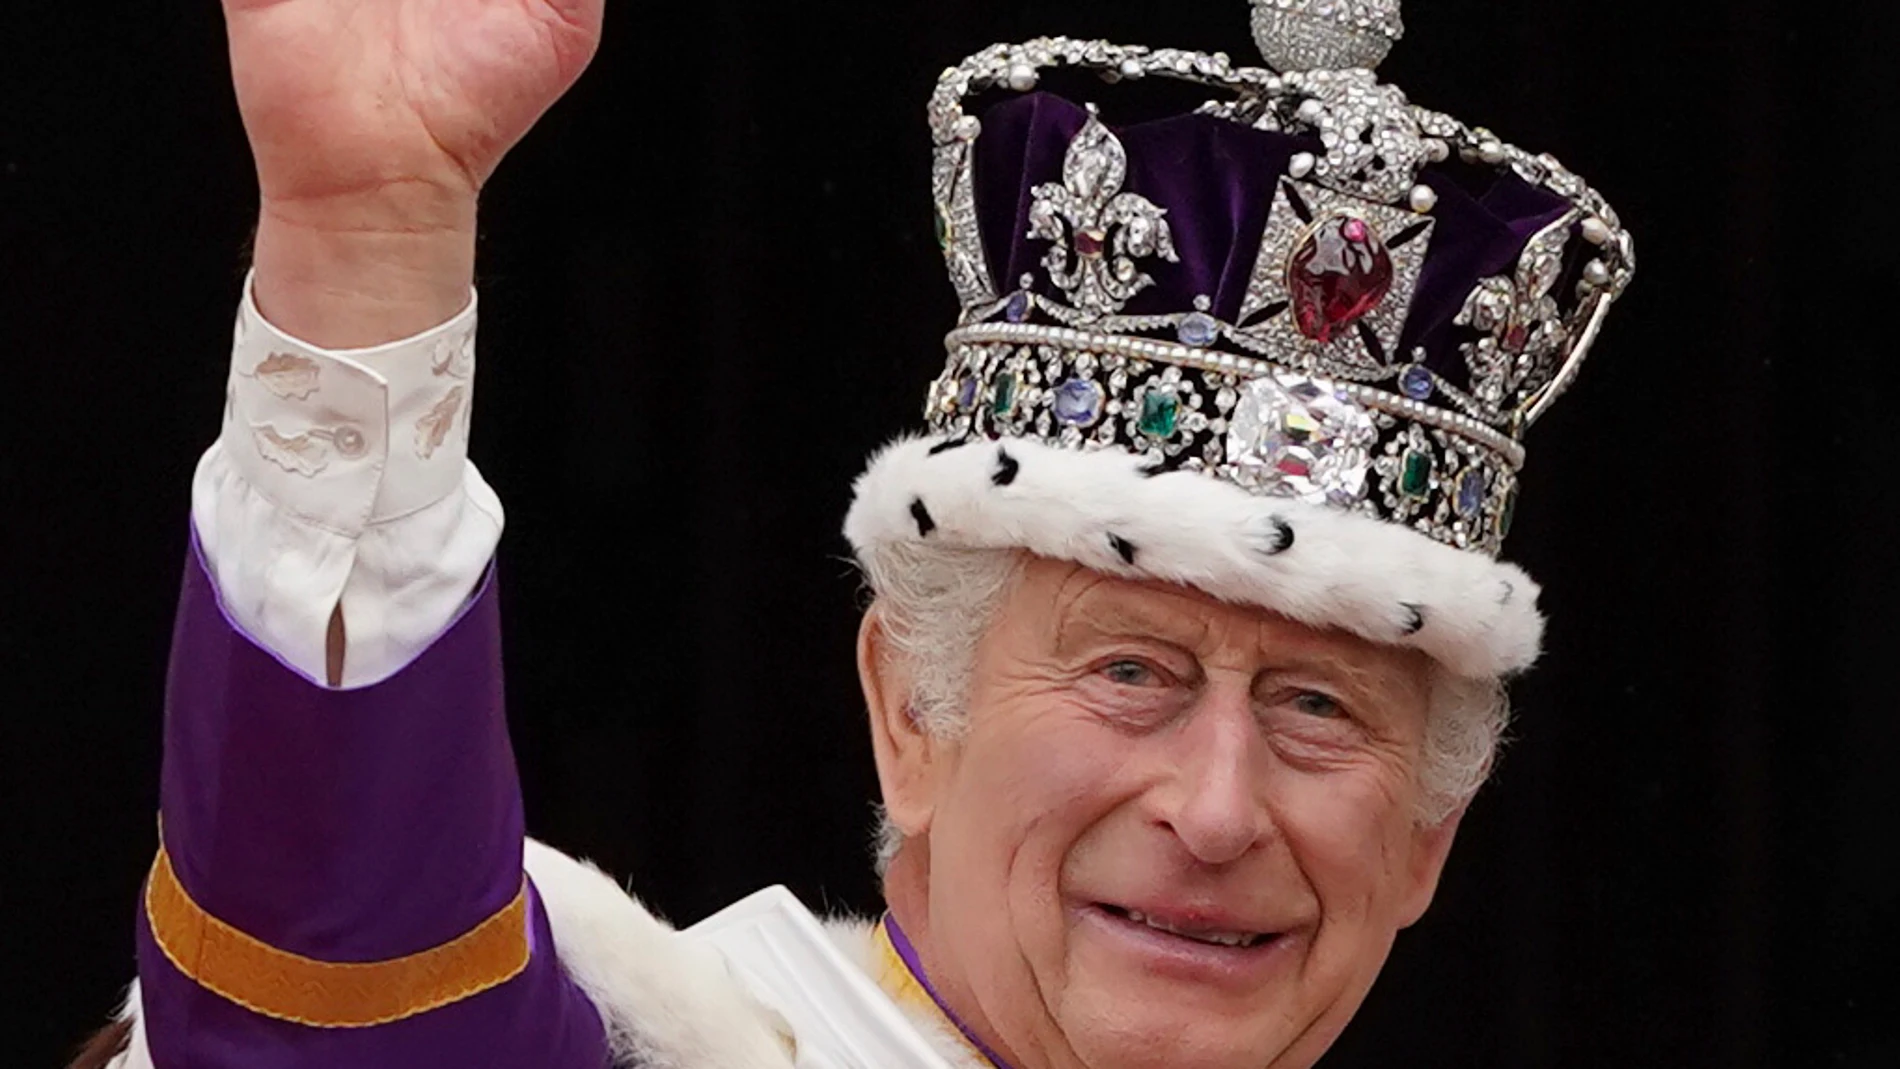 King Charles III waves as he leaves the balcony of Buckingham Palace, London, following his coronation Saturday May 6, 2023. (Stefan Rousseau/Pool photo via AP)